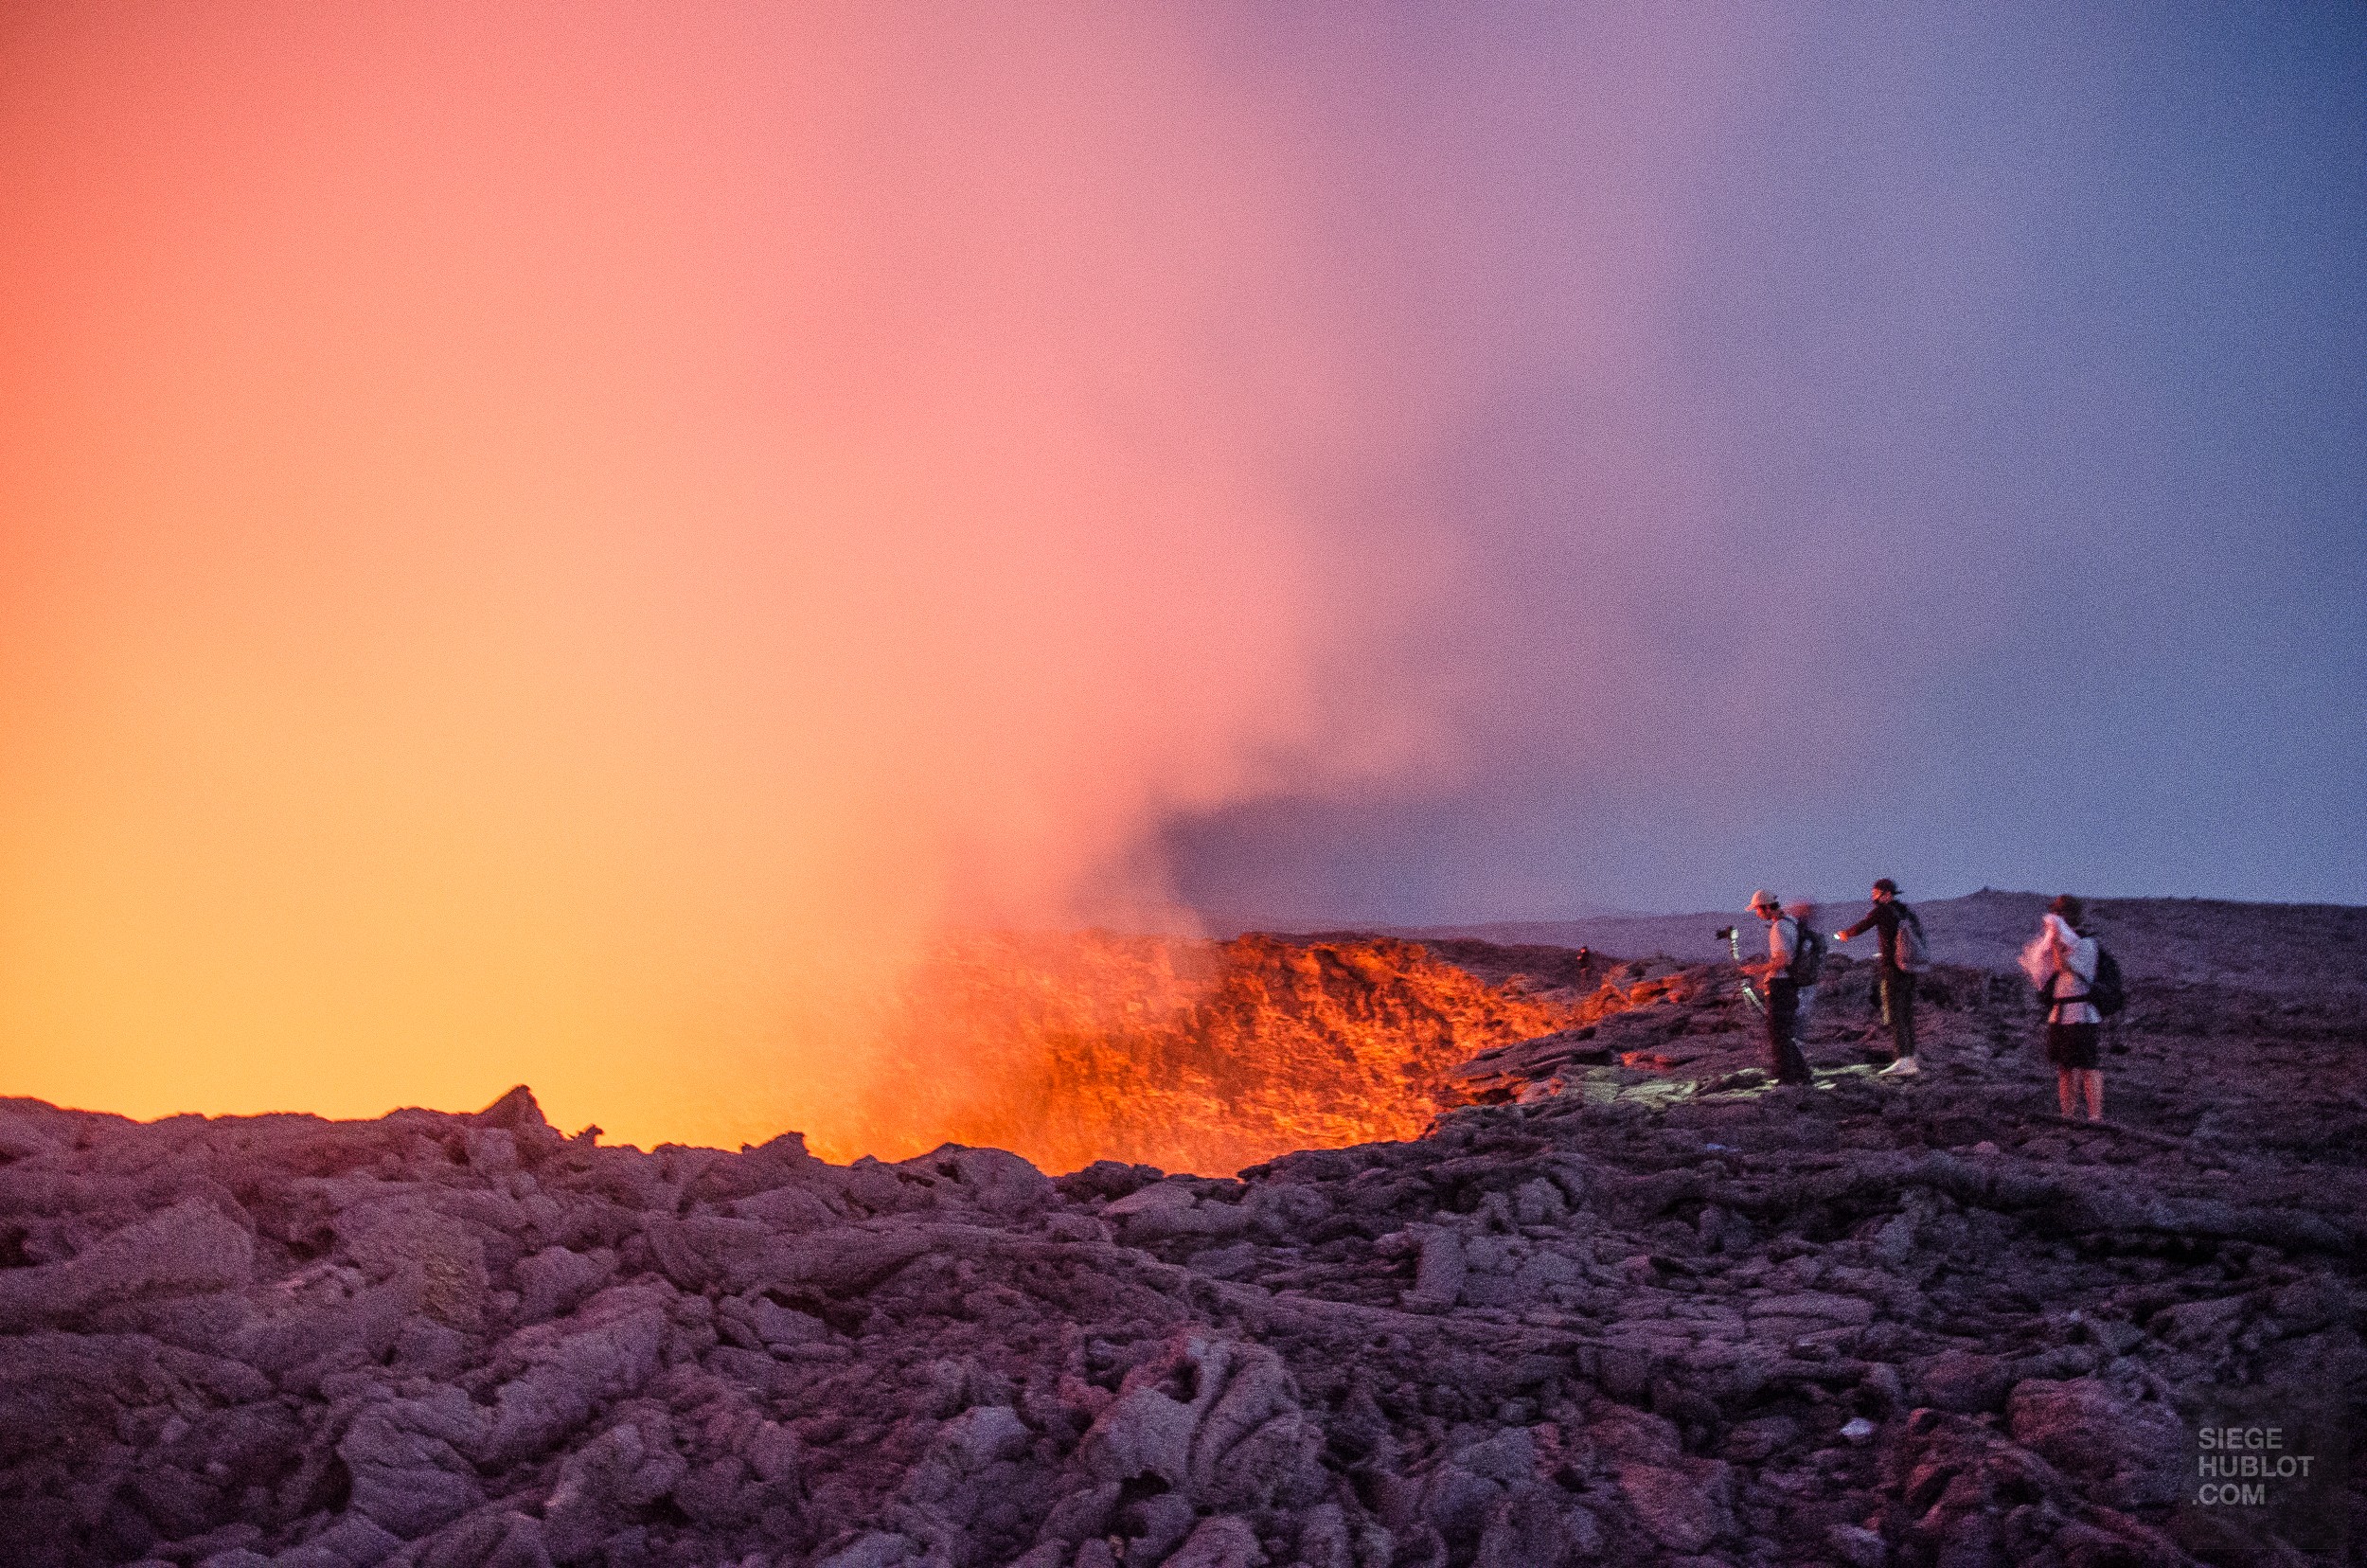 cratere rebord volcan - volcan erta ale - Visiter une autre planete: Danakil, Ethiopie - afrique, ethiopie